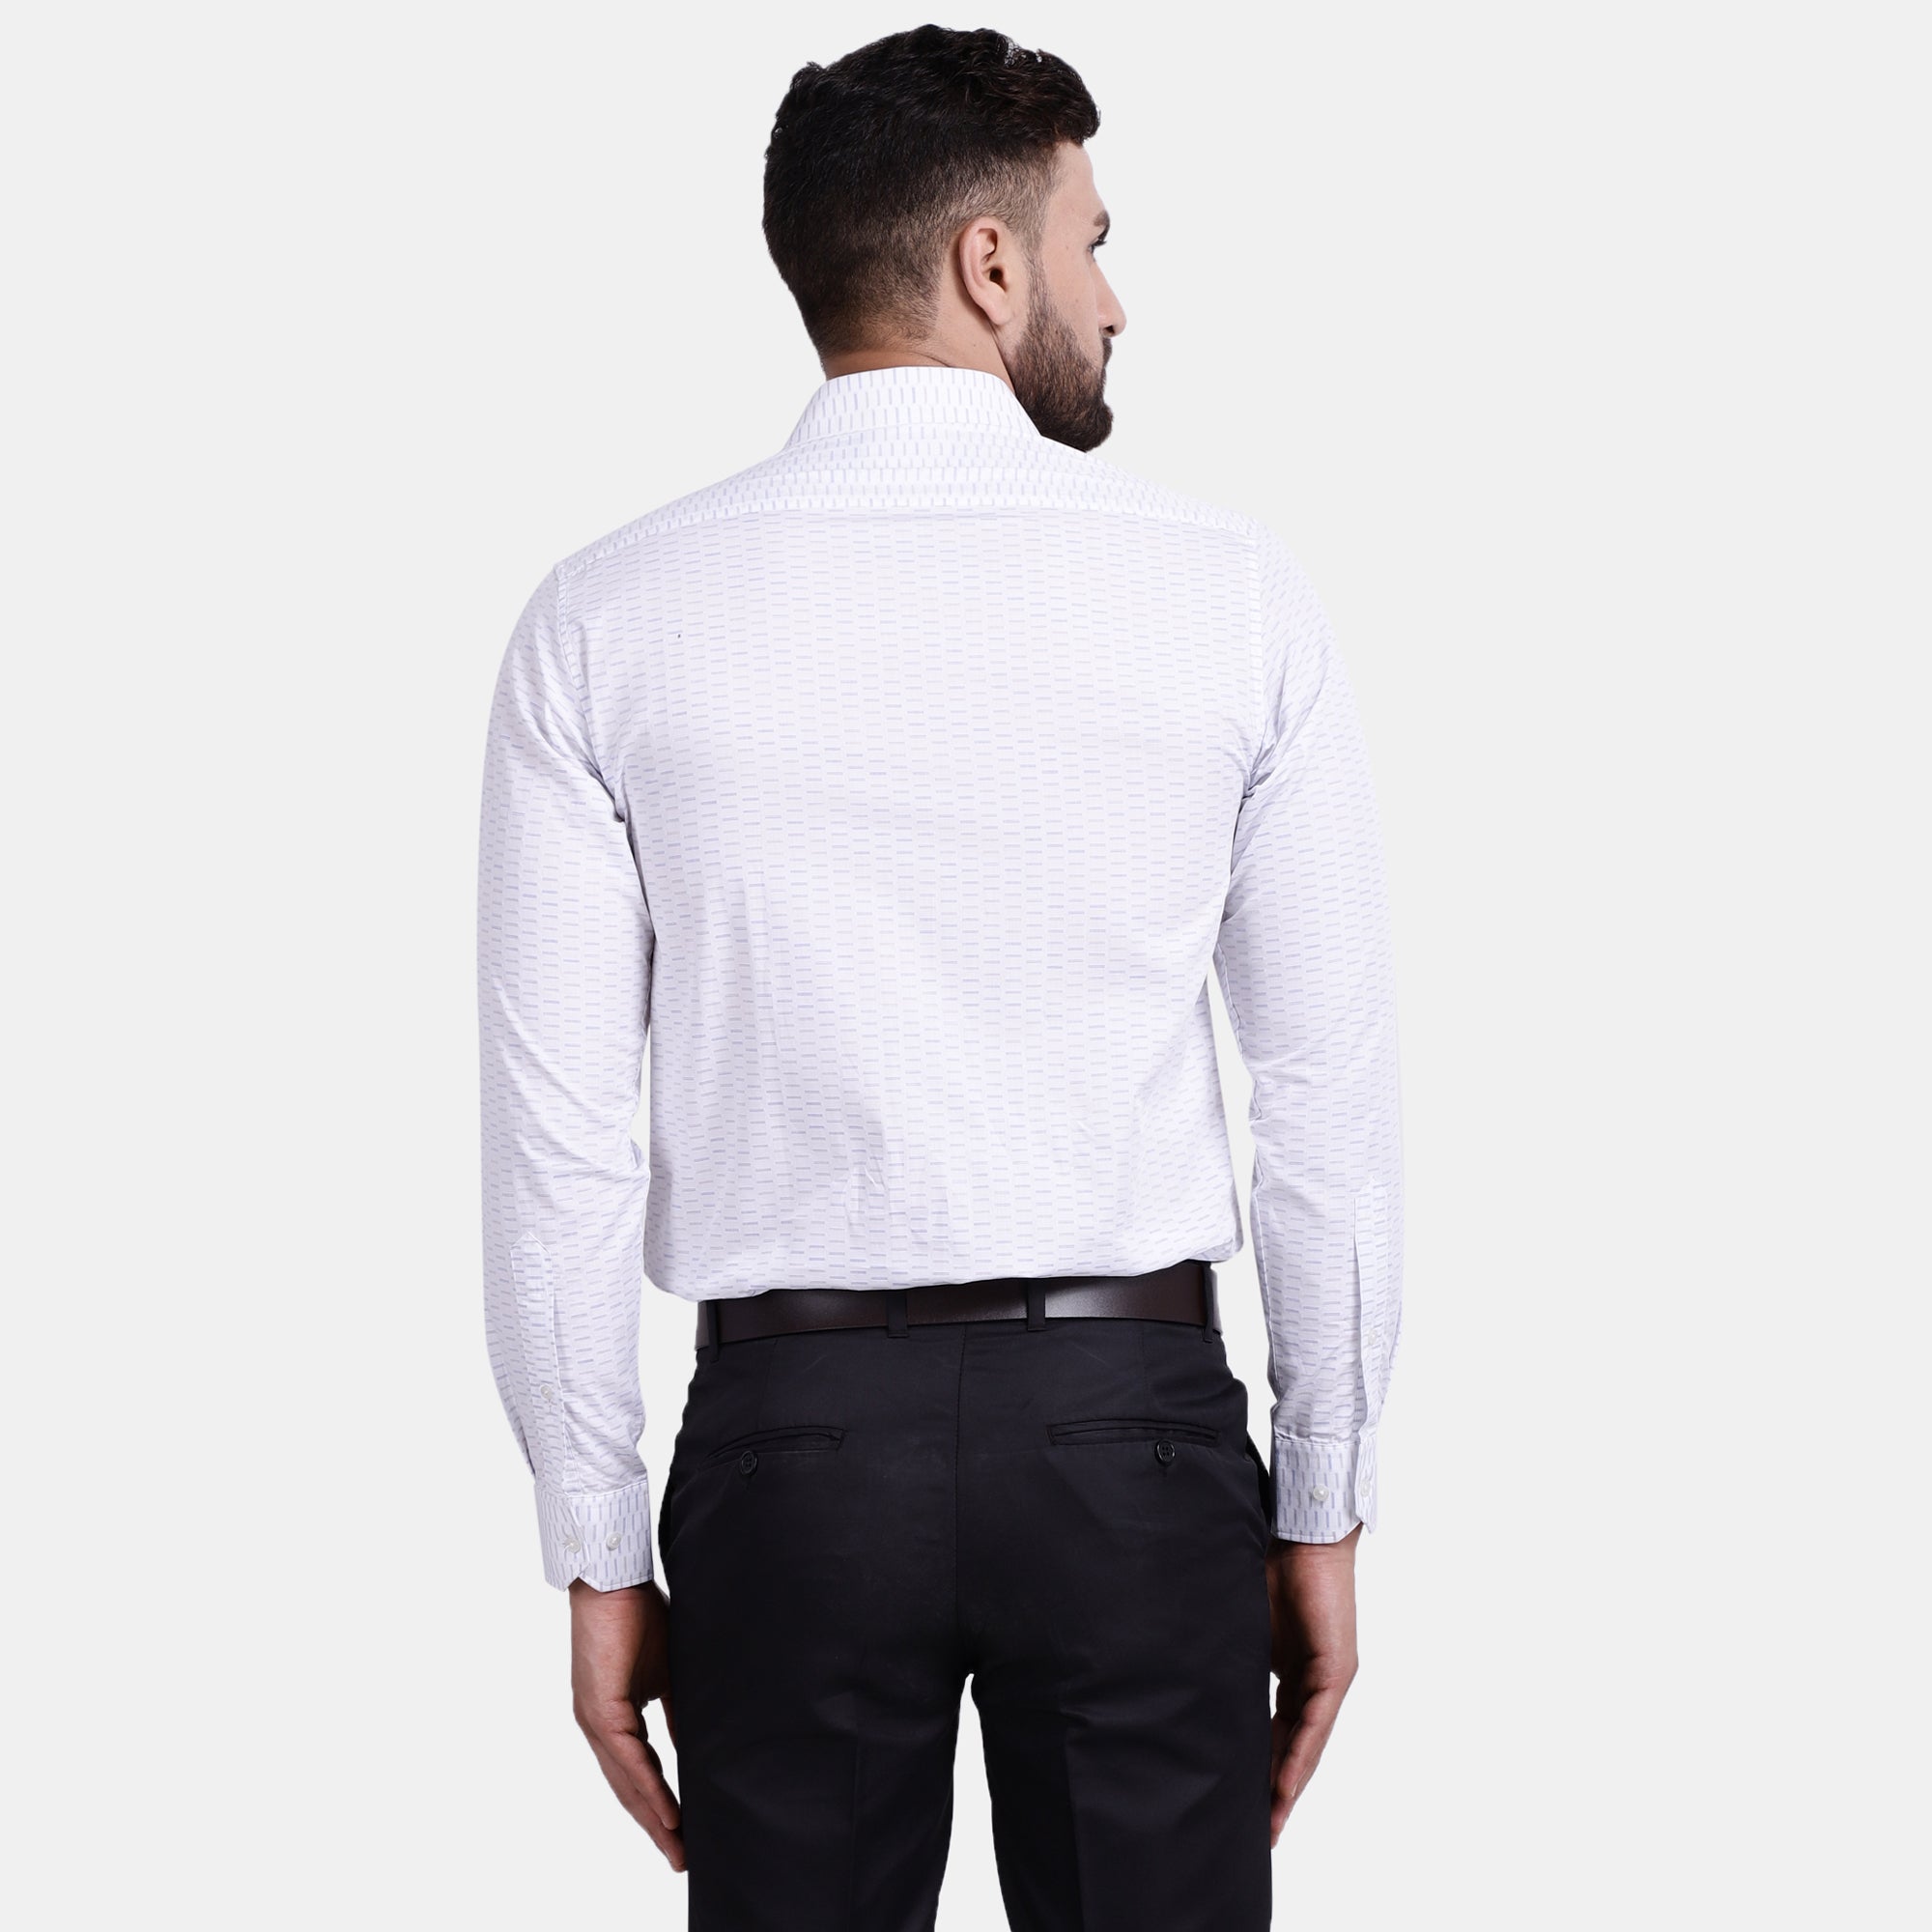 Men's Luthai Supima Mercerised Cotton Small Broken Stripe Jacquard Design Slim Fit Dress Shirt